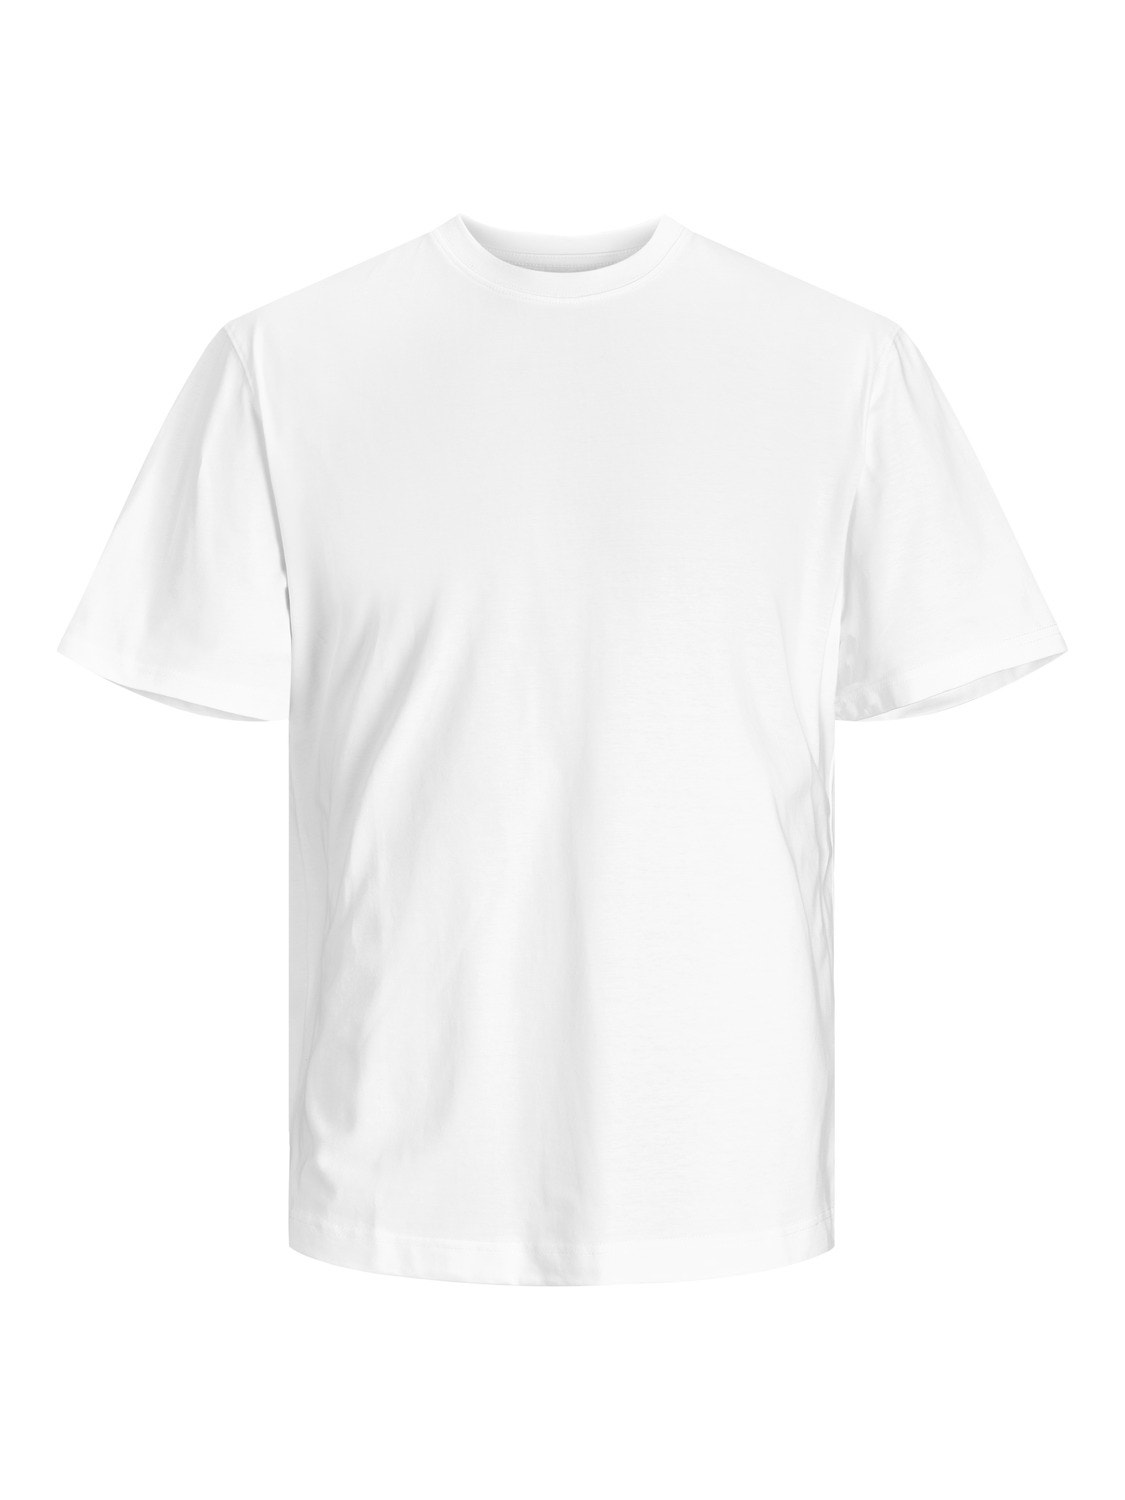 T-shirt Blanc Homme Jack & Jones Chest